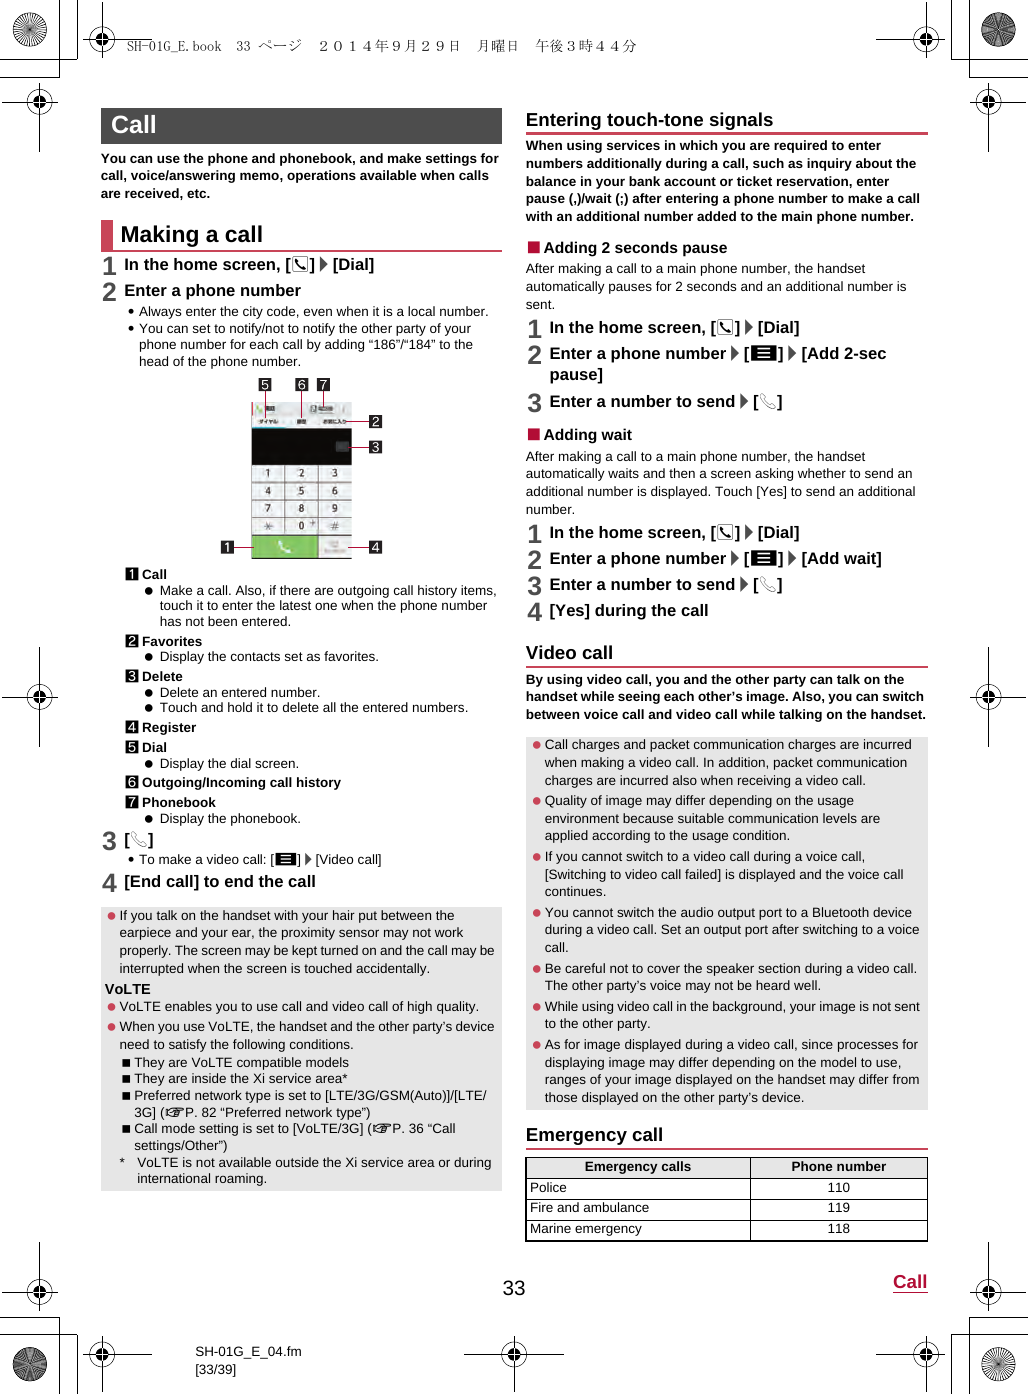 Page 15 of Sharp HRO00212 Smart Phone User Manual